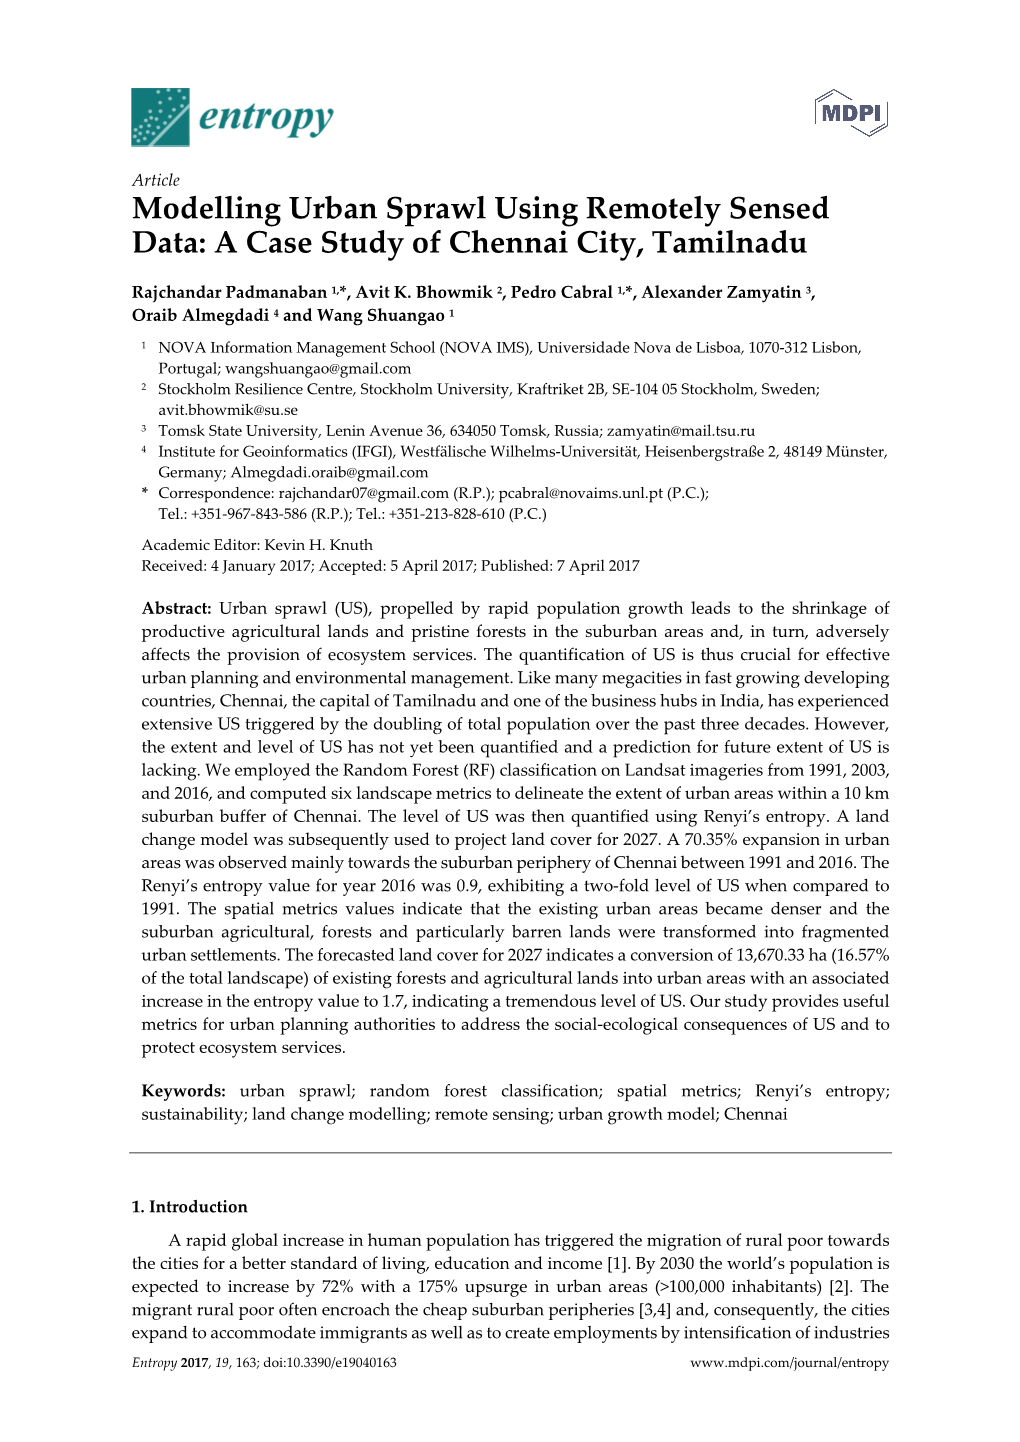 A Case Study of Chennai City, Tamilnadu